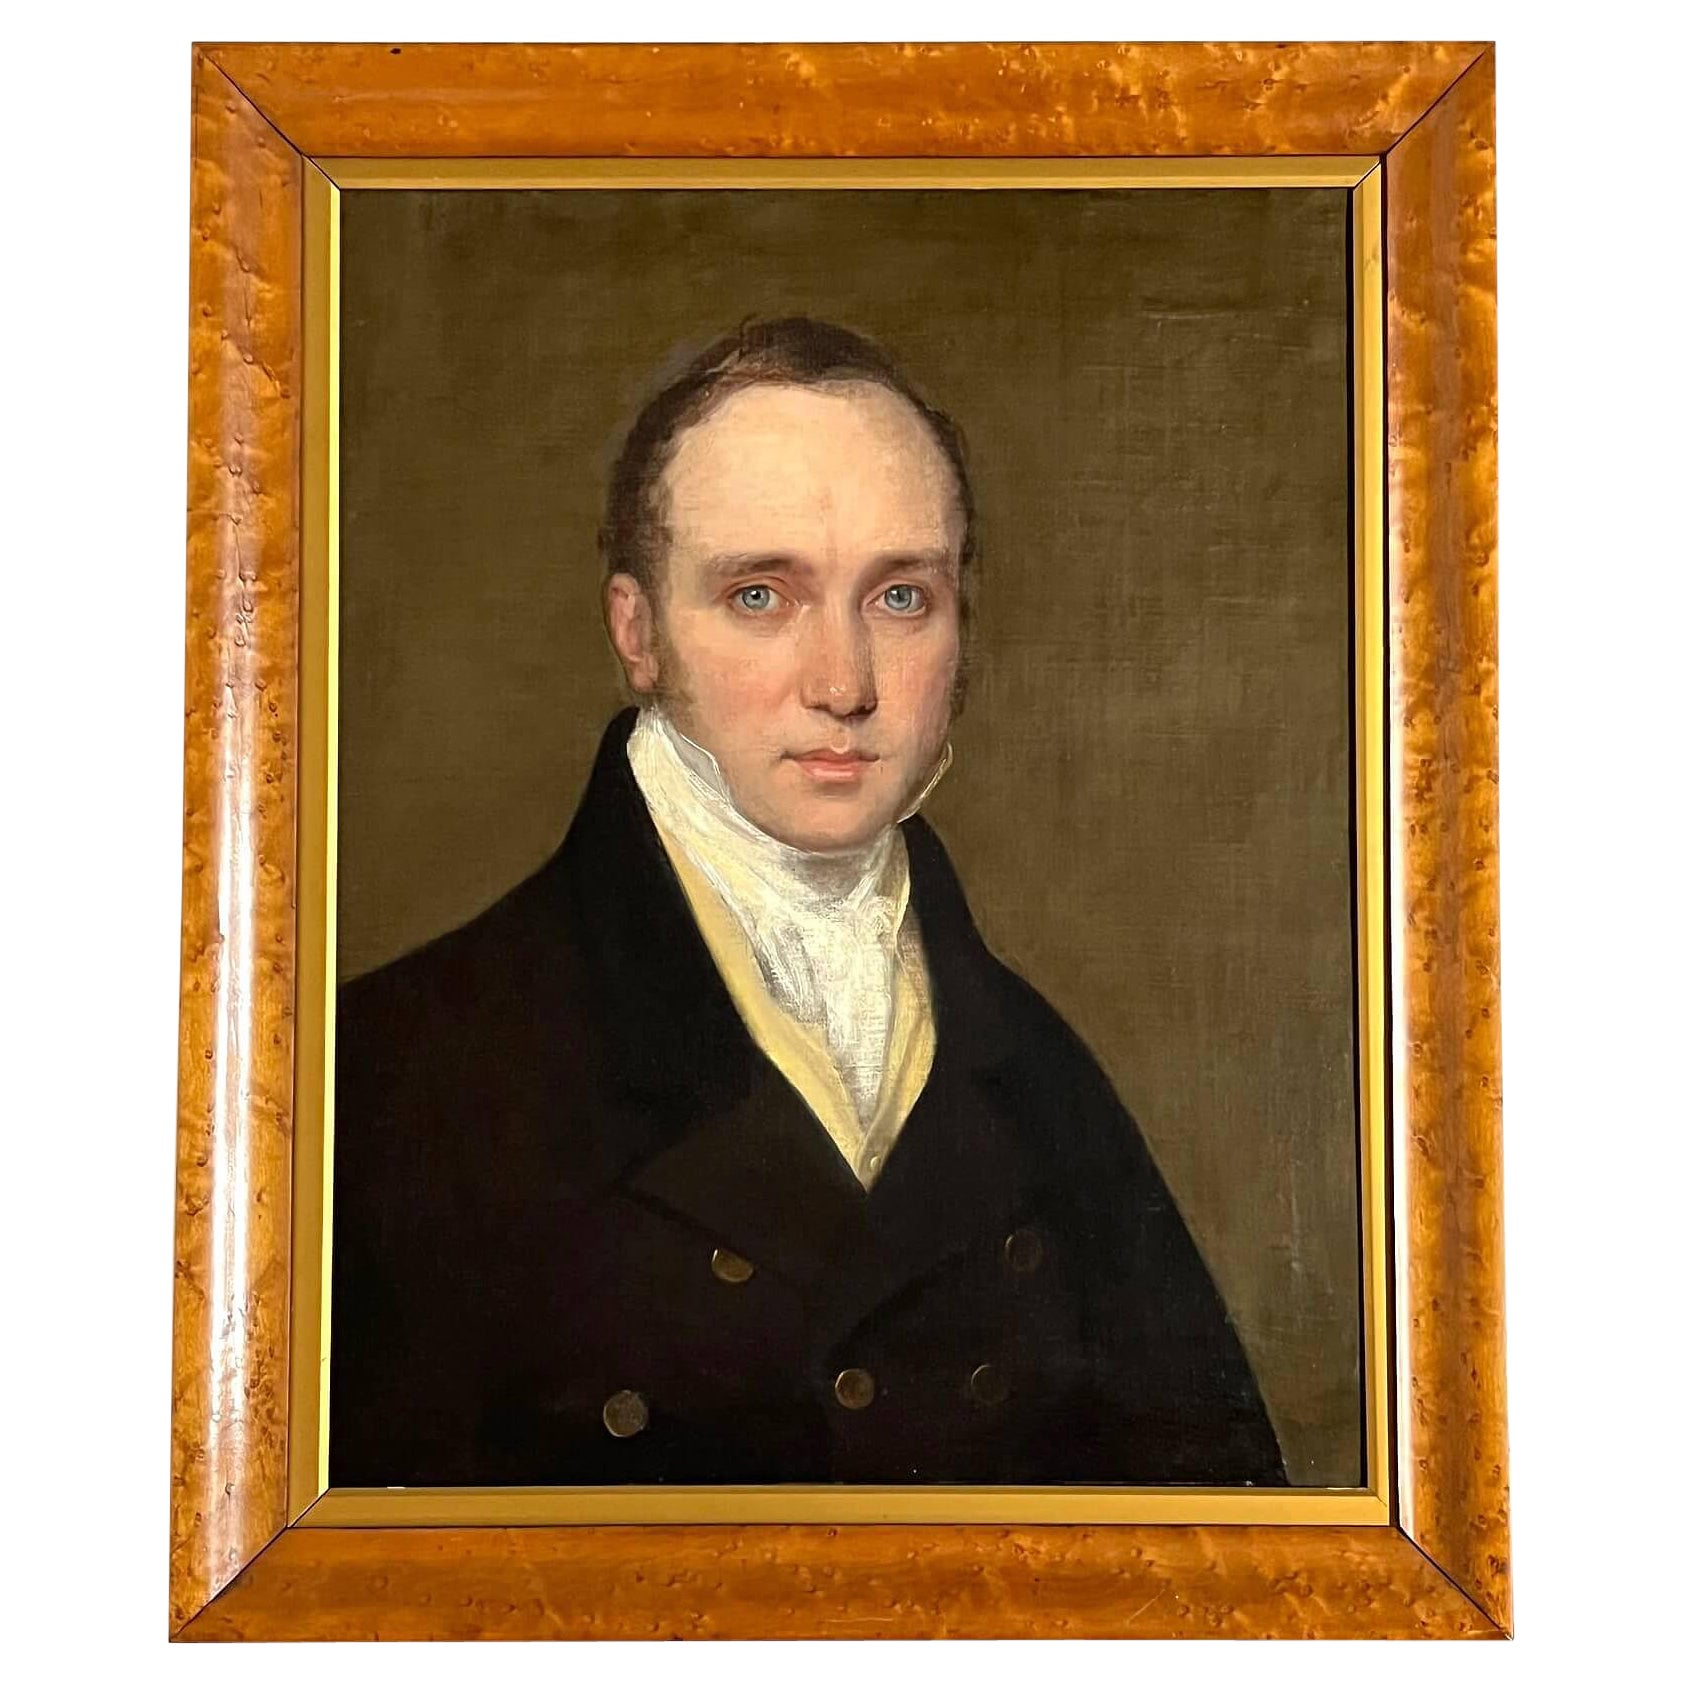 Portrait of a Gentleman with Piercing Blue Eyes, School of Raeburn, circa 1820